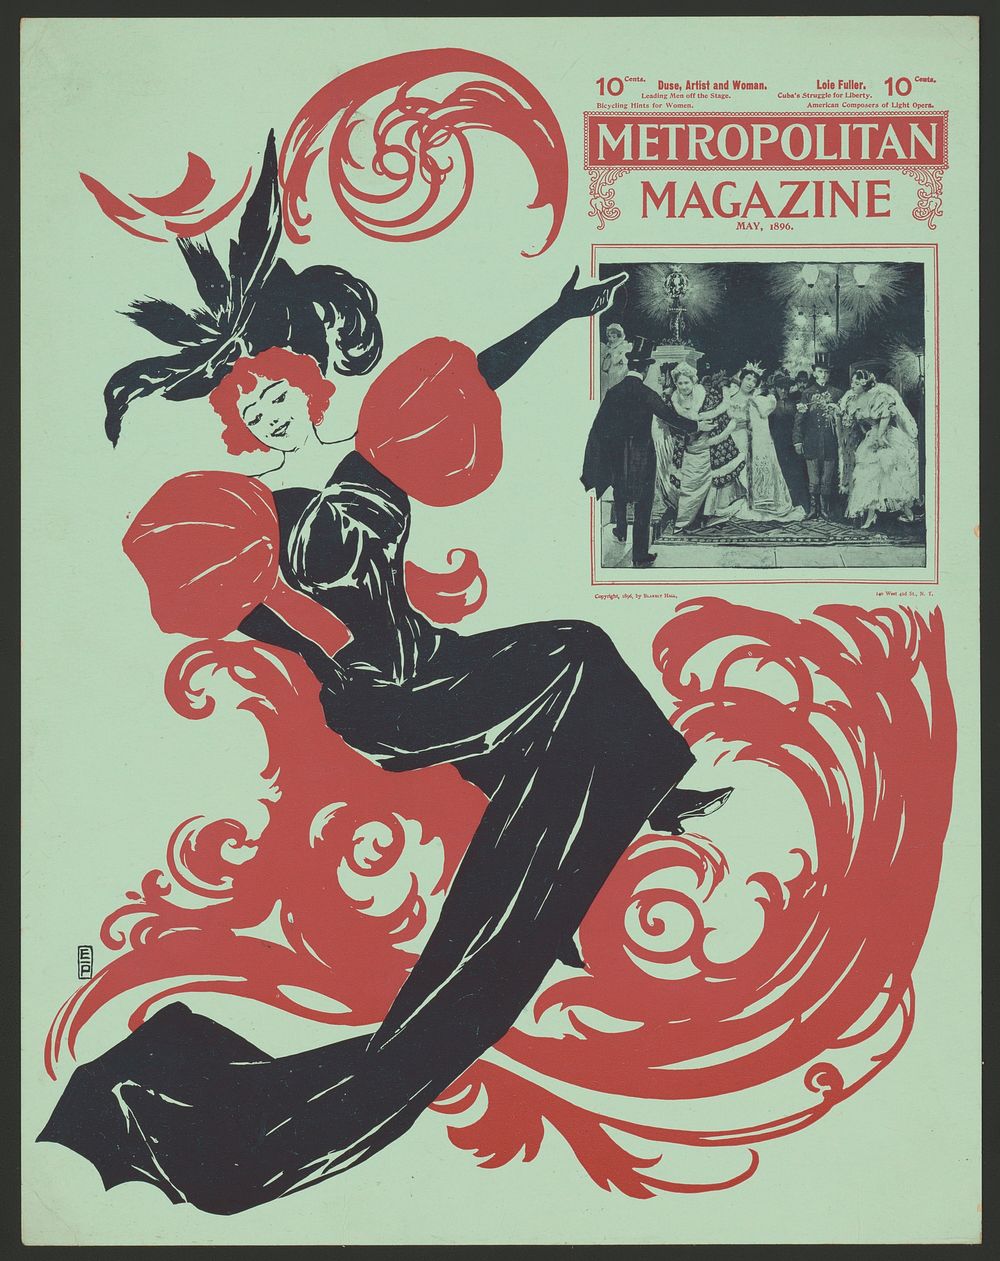 Metropolitan Magazine, May 1896